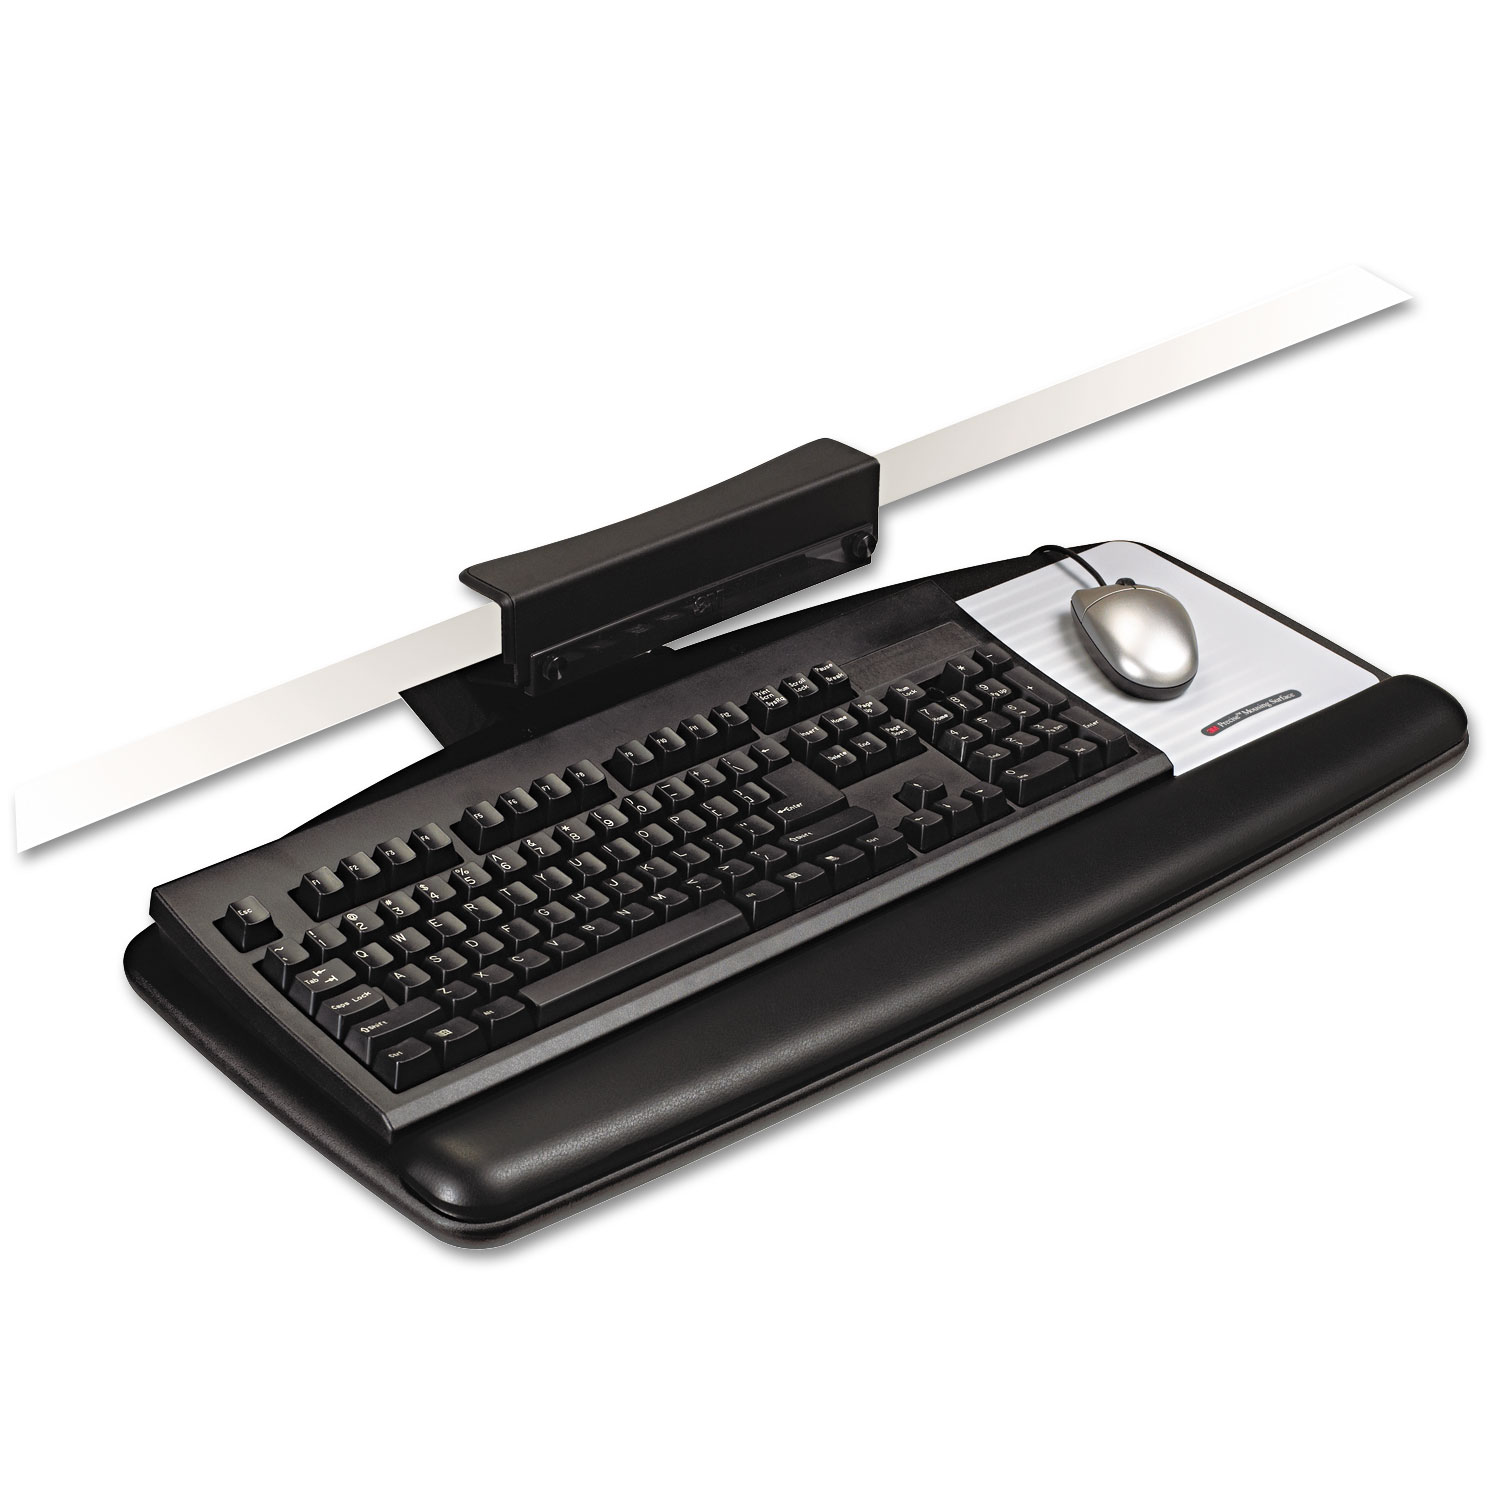  3M AKT65LE Tool-Free Install Knob Adjust Keyboard Tray With Standard Platform, Black (MMMAKT65LE) 